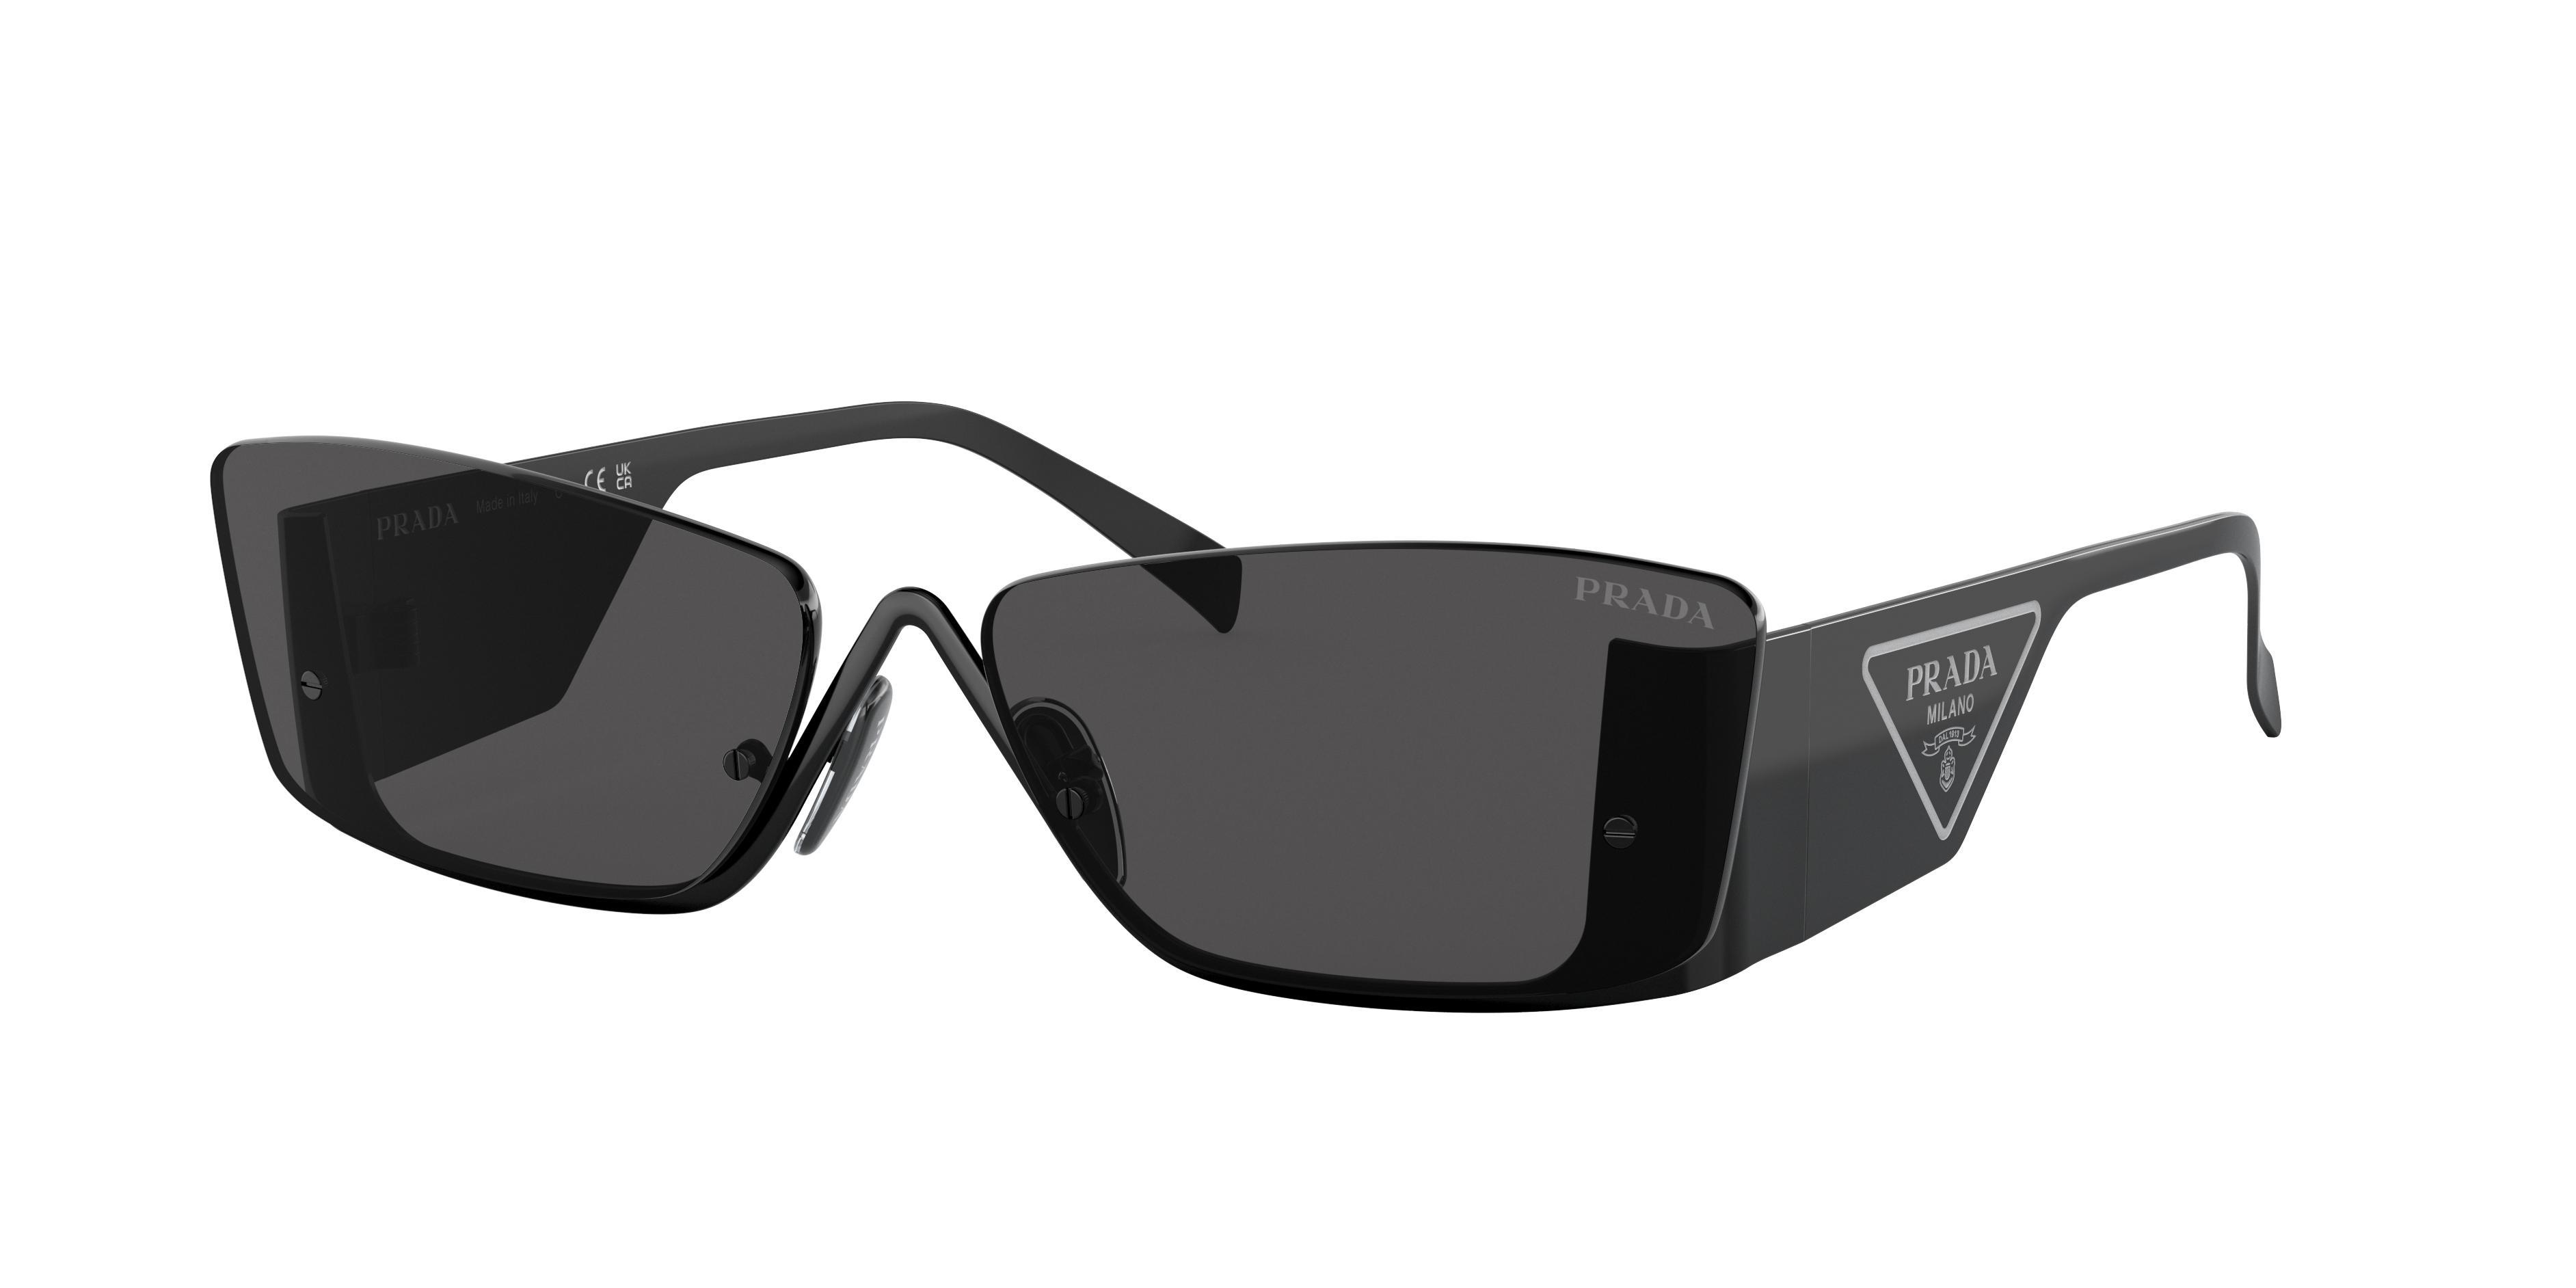 Prada 57mm Rectangular Sunglasses Product Image